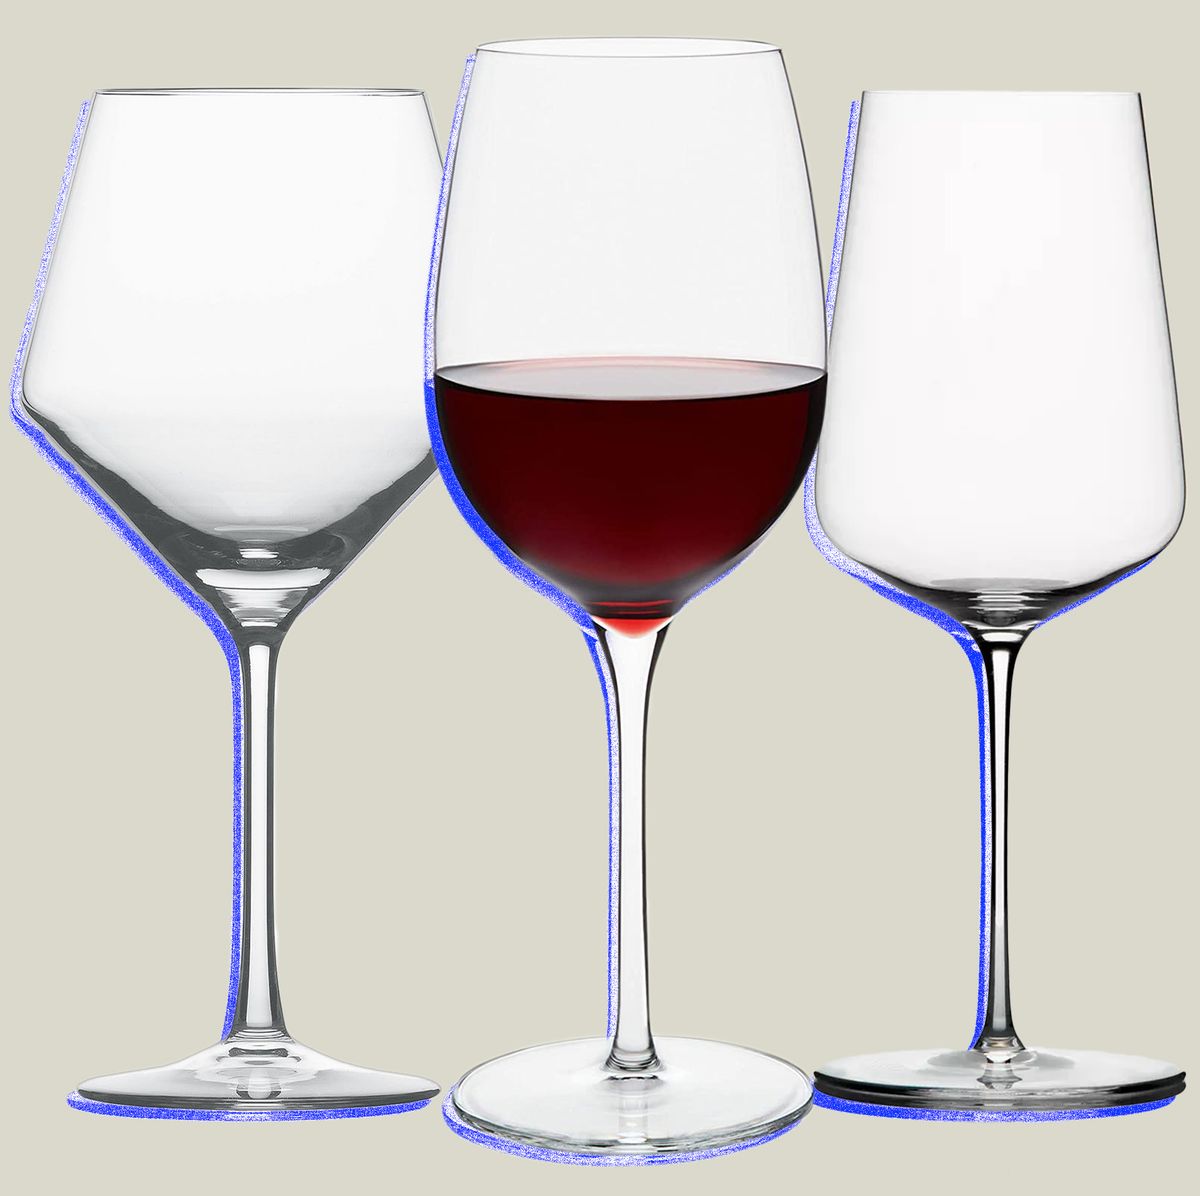 https://hips.hearstapps.com/hmg-prod.s3.amazonaws.com/images/best-wine-glasses-lead-1664814254.jpg?crop=0.502xw:1.00xh;0.250xw,0&resize=1200:*